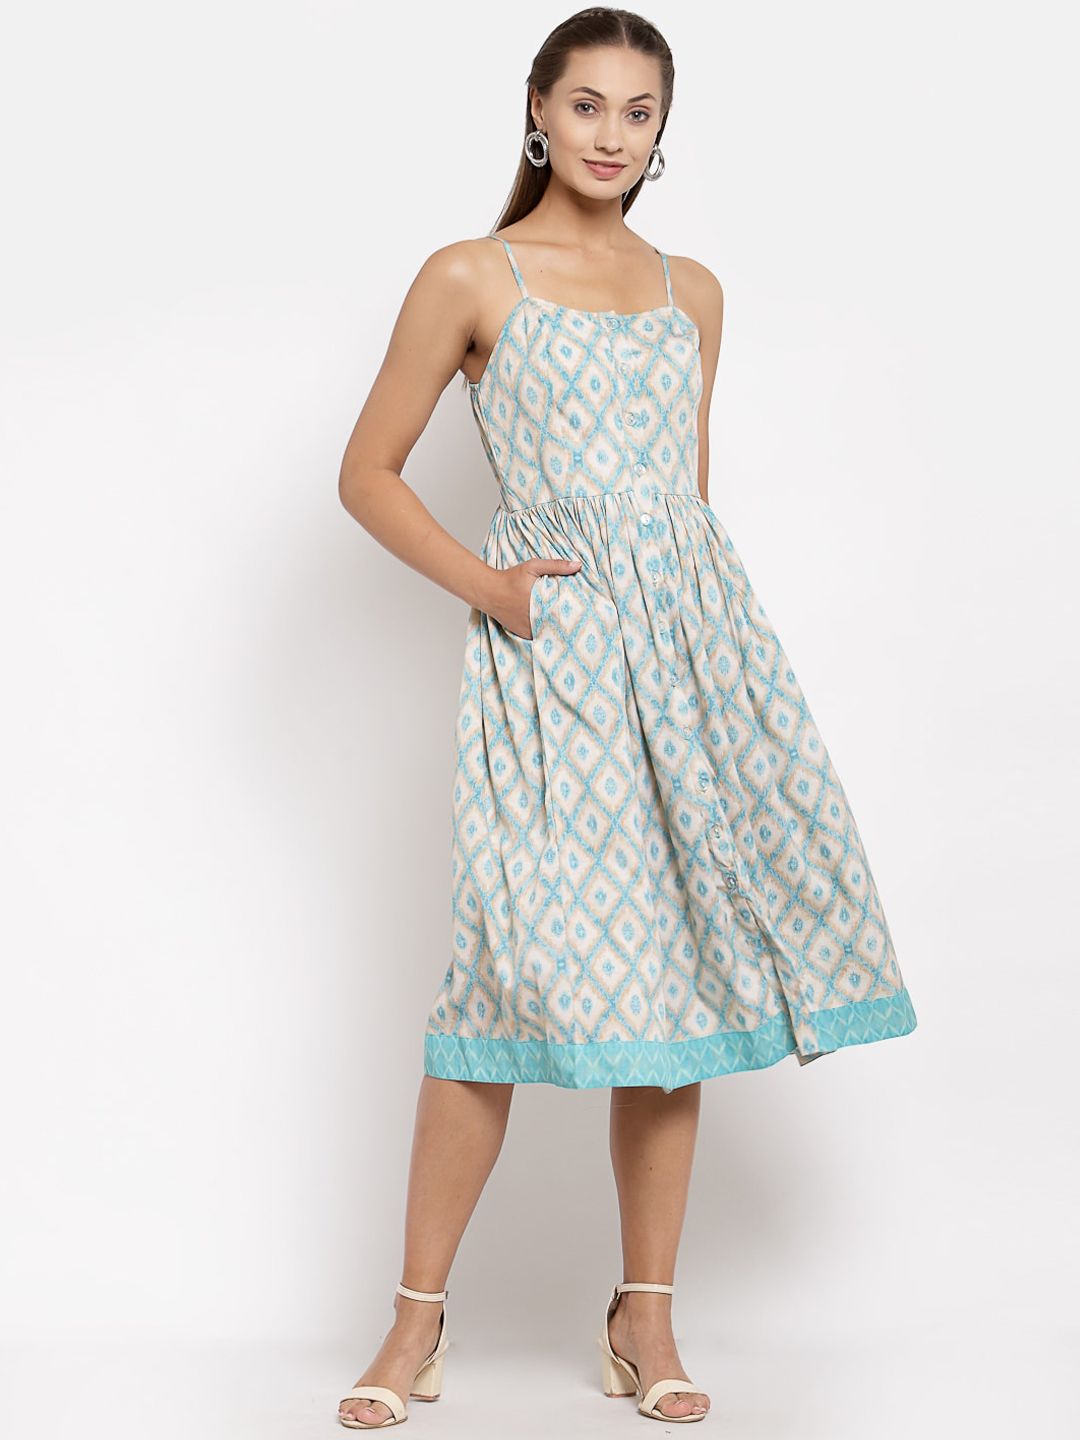 Myshka Off White & Turquoise Blue Midi Dress Price in India